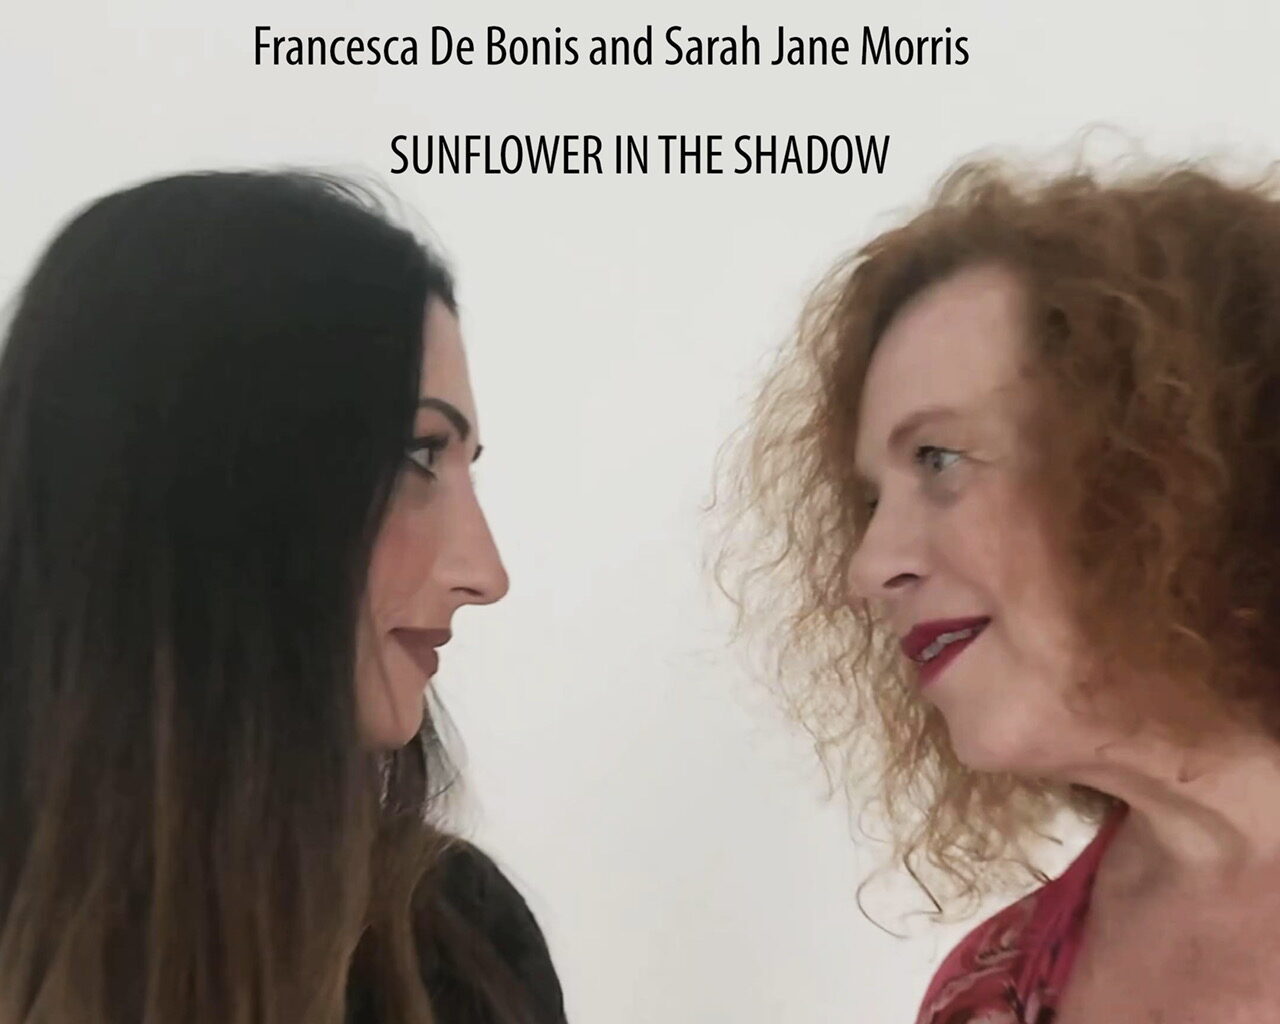 Sunflower in the Shadow, l’atteso singolo di Francesca De Bonis e Sarah Jane Morris